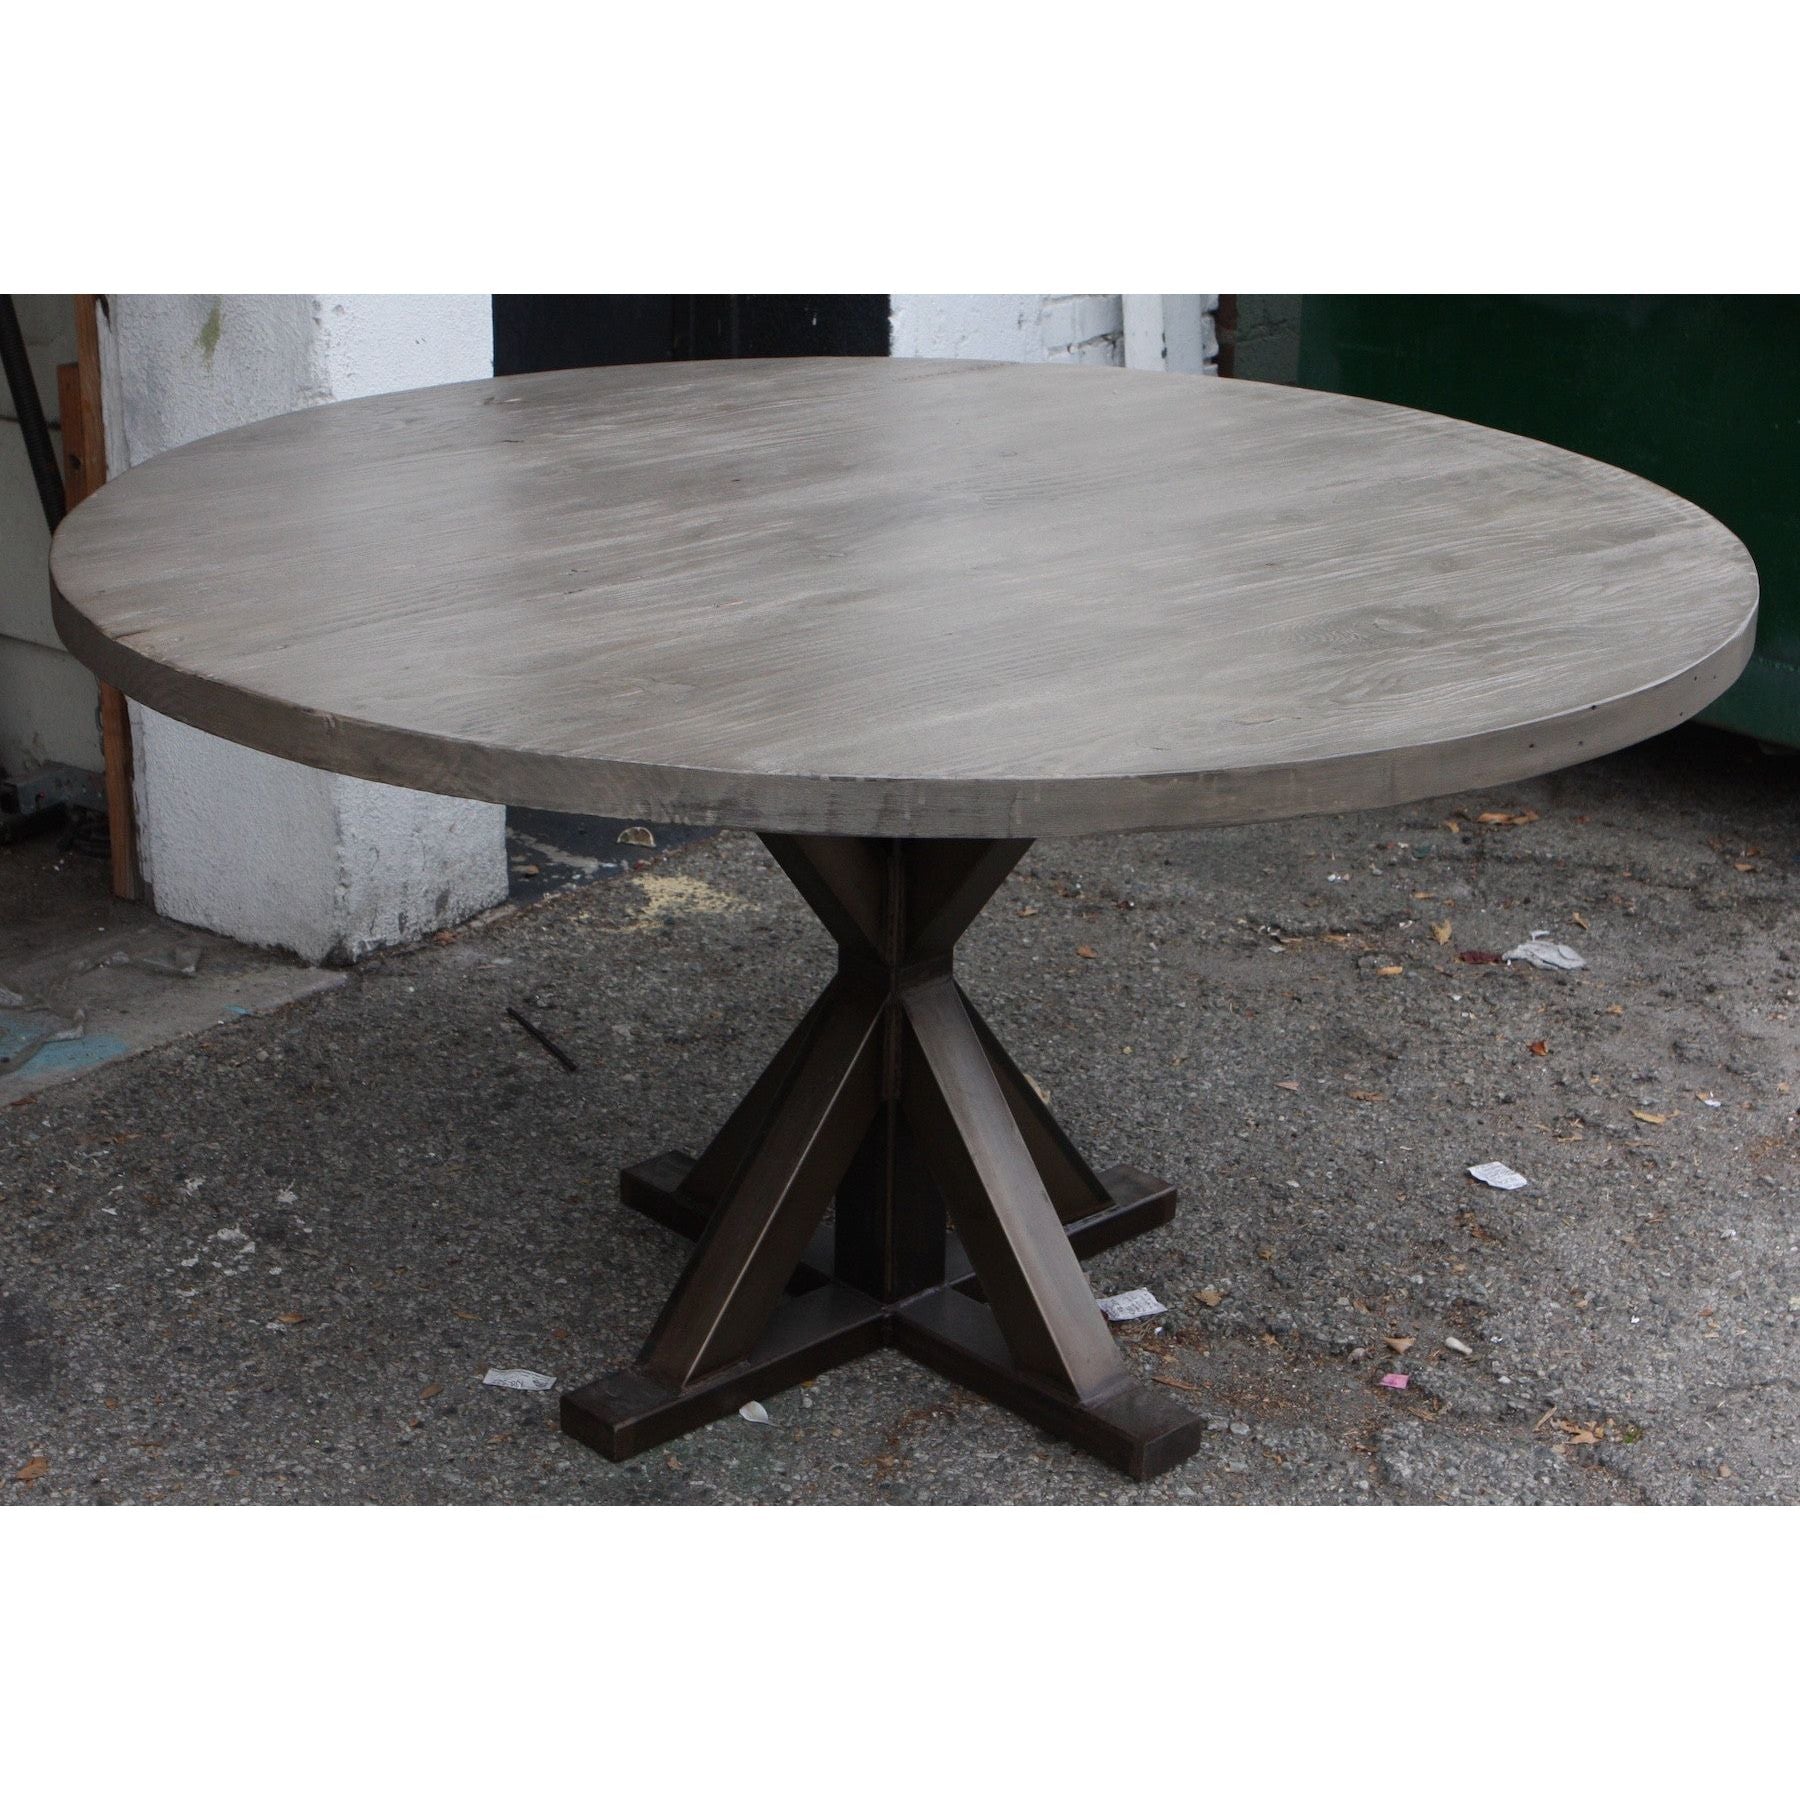 Round x 2. Круглый стол лофт (столешница дуб, основание металл) r43-632. Обеденный круглый стол Стефиус 2055. VIVALIMA стол 120. Столик круглый.